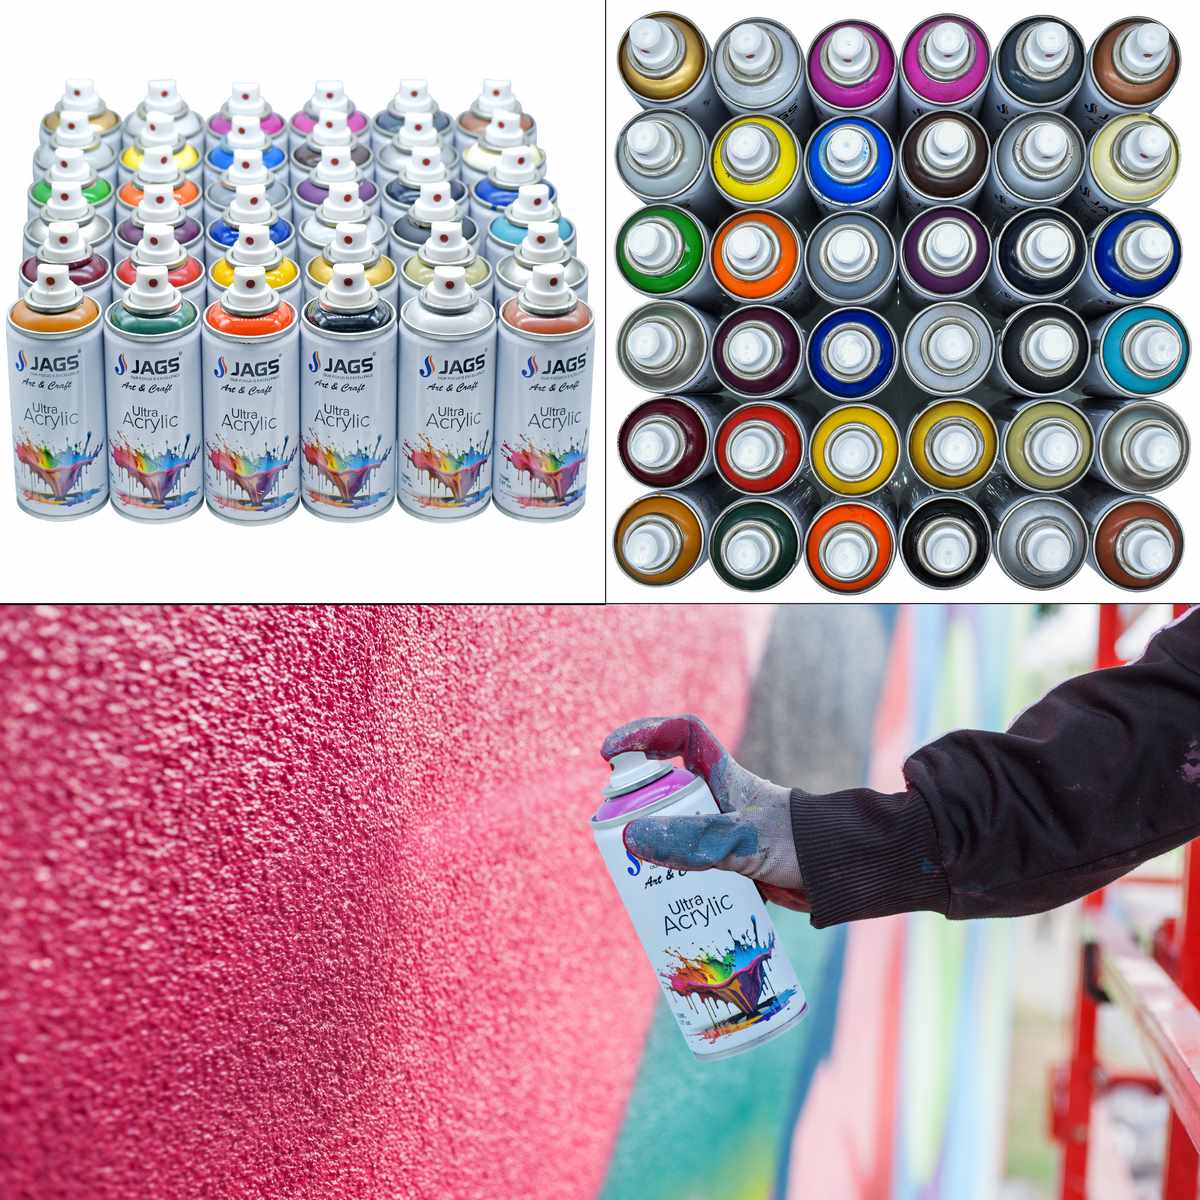 jags-mumbai Paint & Colours Jags Spray Ultra Acrylic 150ml Beige 1001 (JSUA1001)